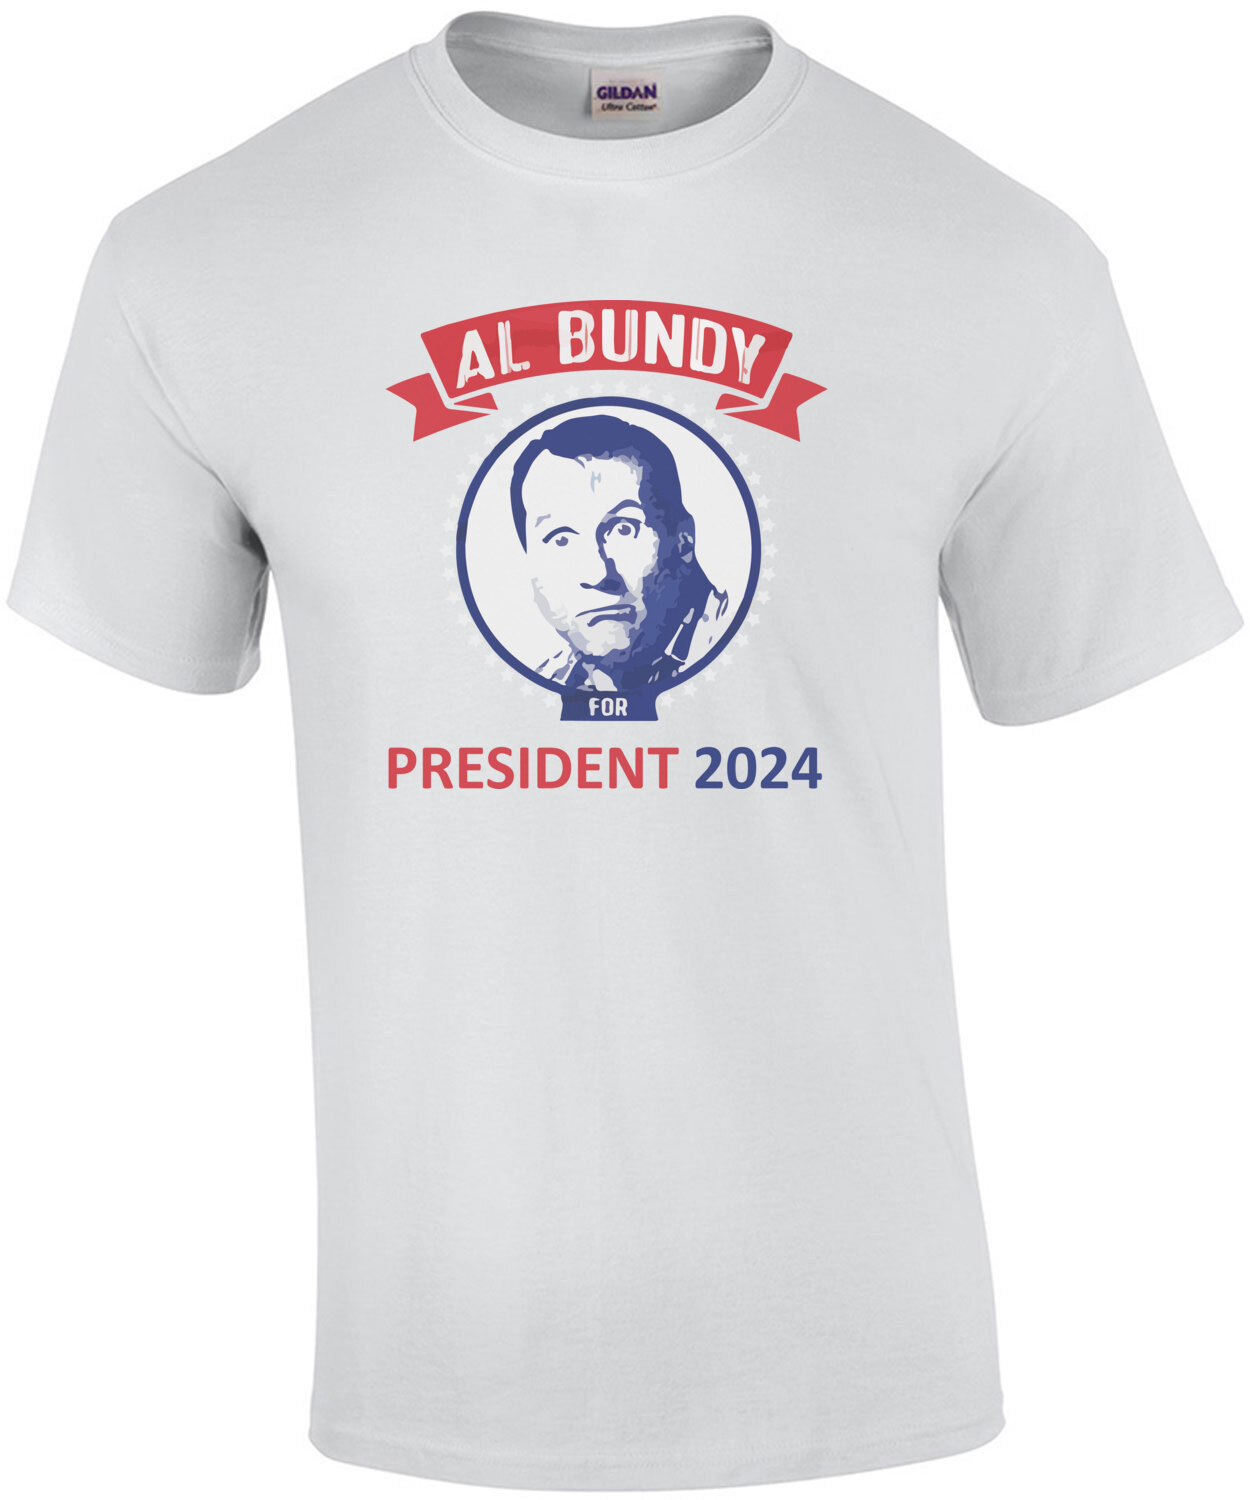 Al Bundy for President 2024 - Funny Election T-Shirt